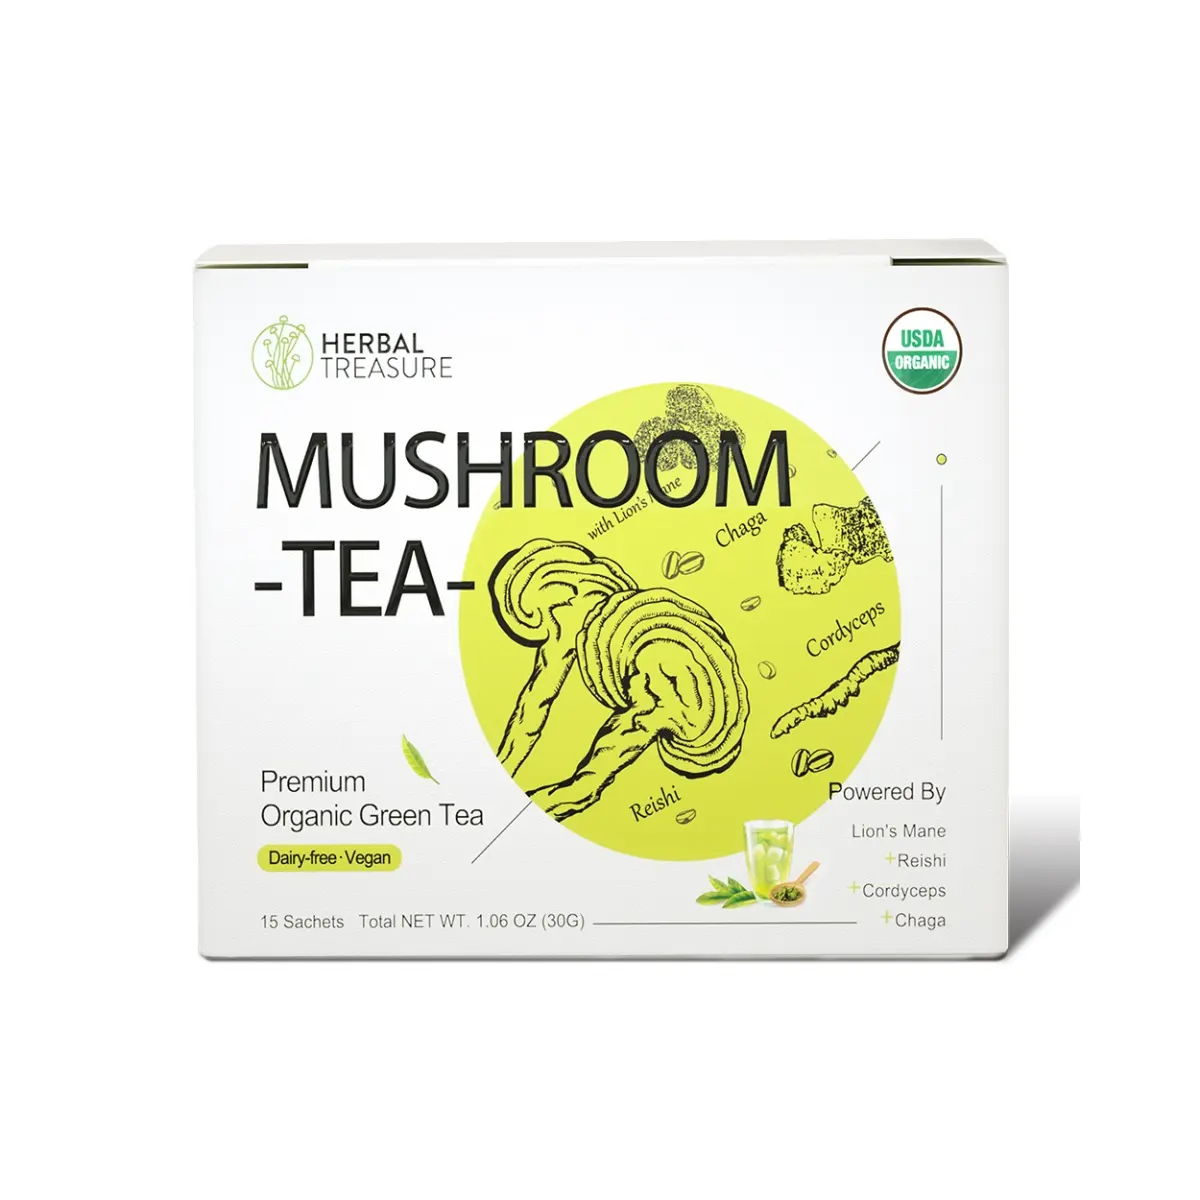 Kantong teh ekstrak Jamur grosir gratis sampel Label pribadi 100% teh jamur murni alami